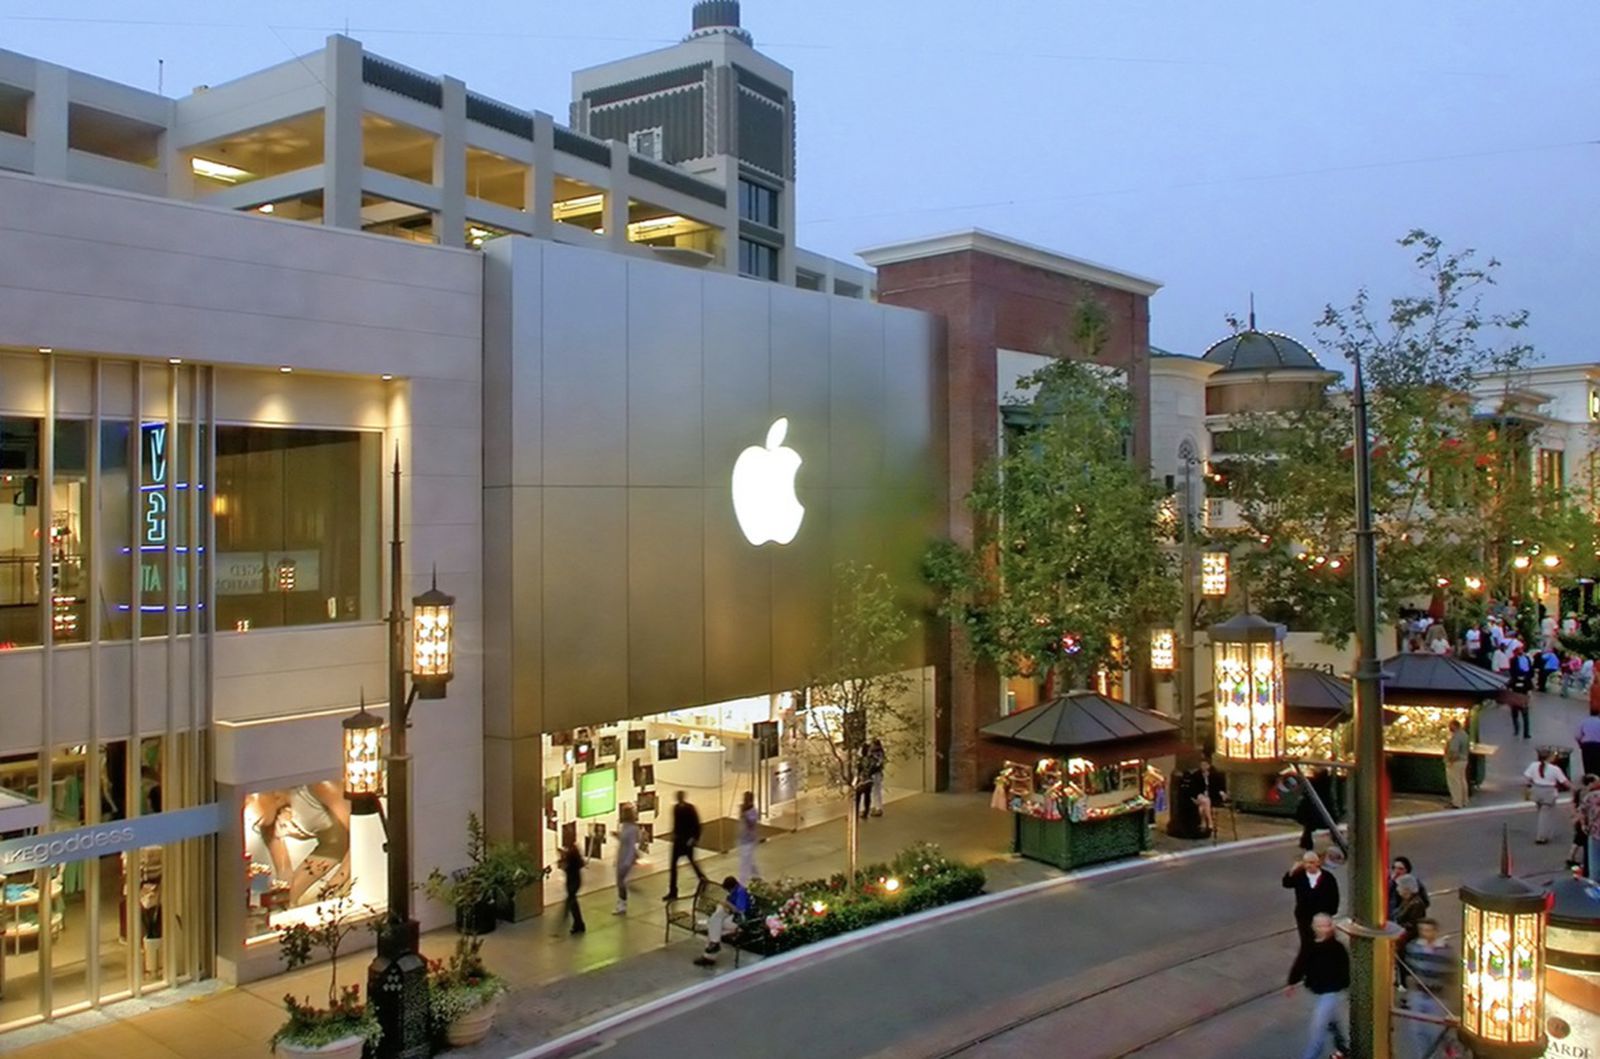 Apple Store - Orlando, Florida, The store was surprisingly …